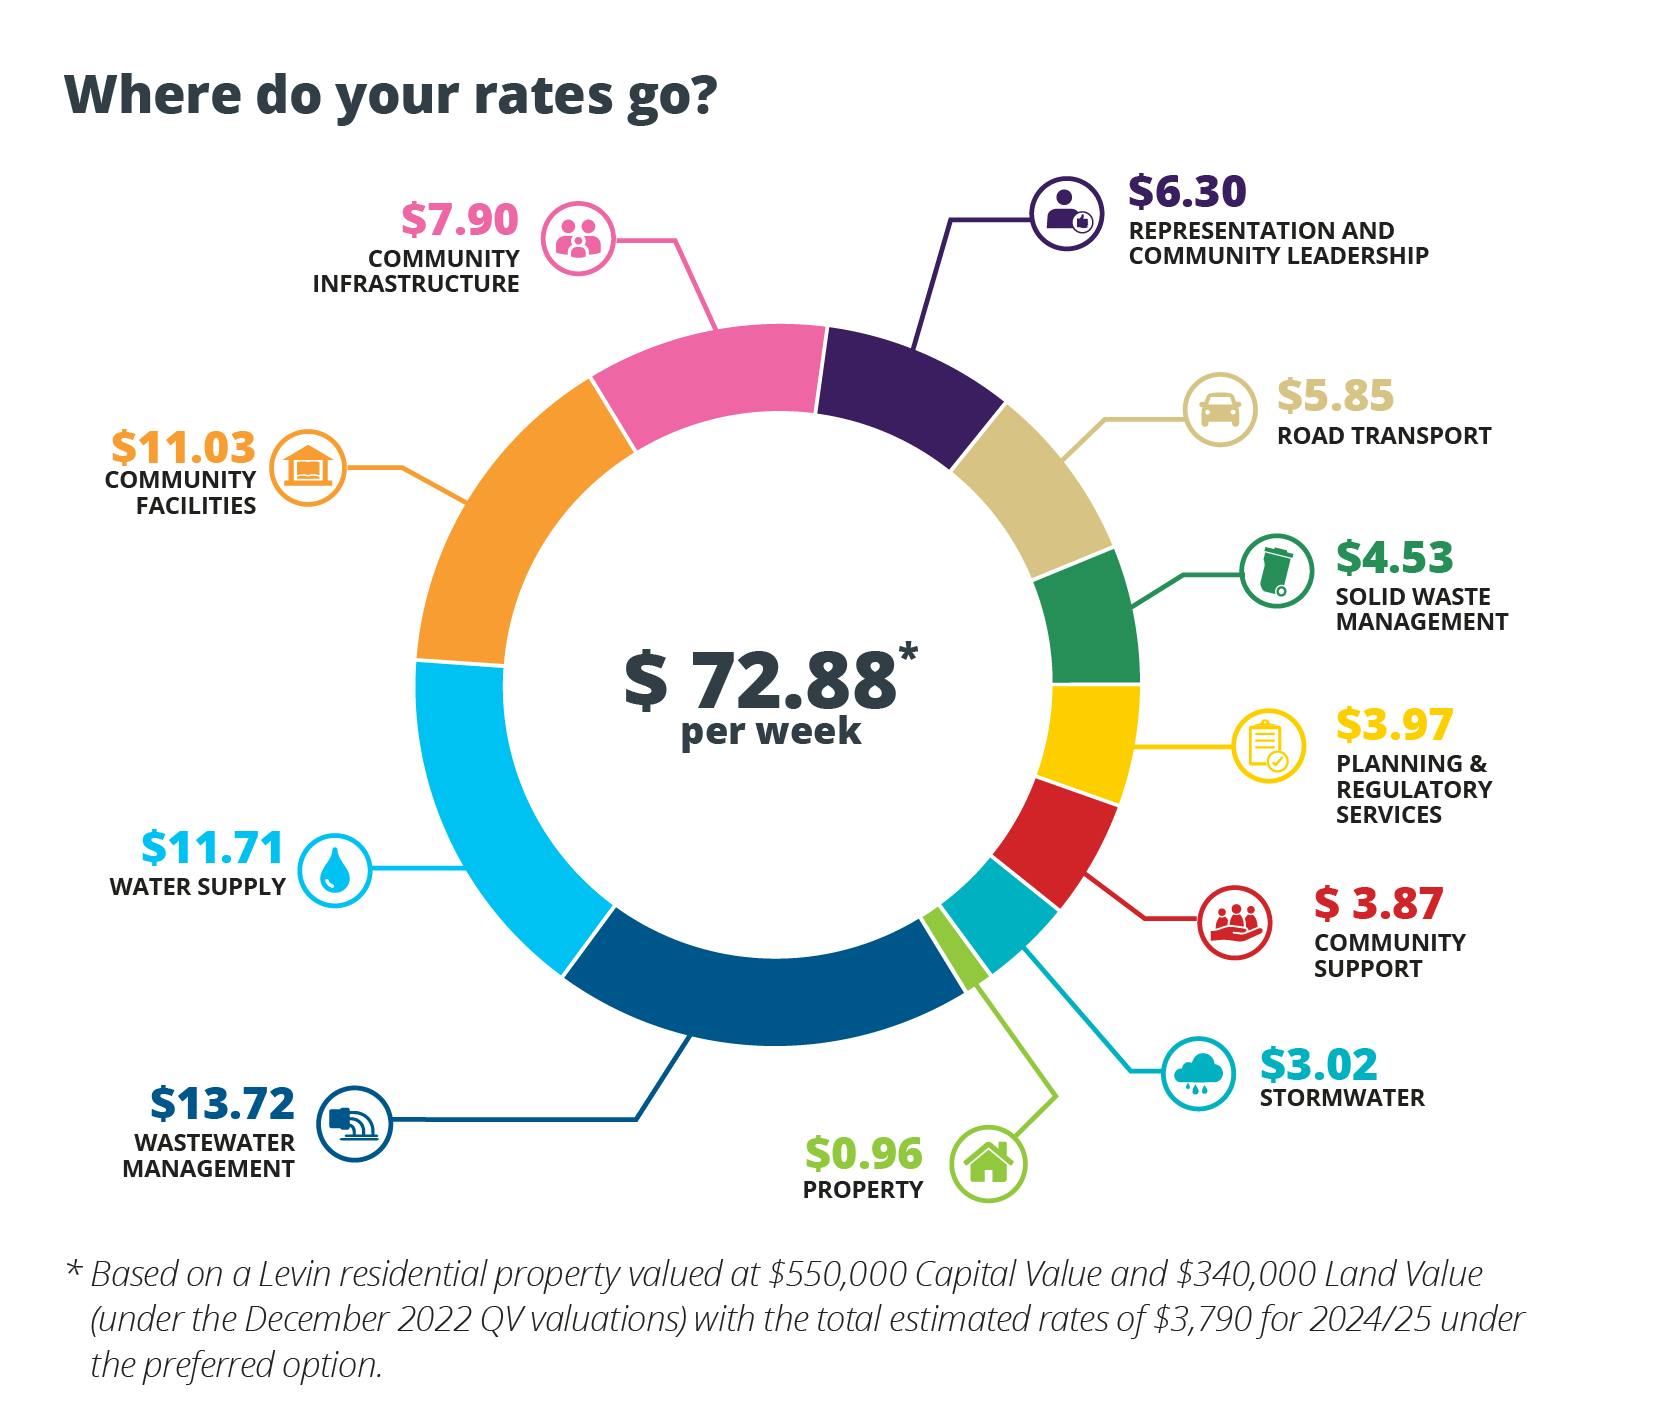 Where do your rates go?